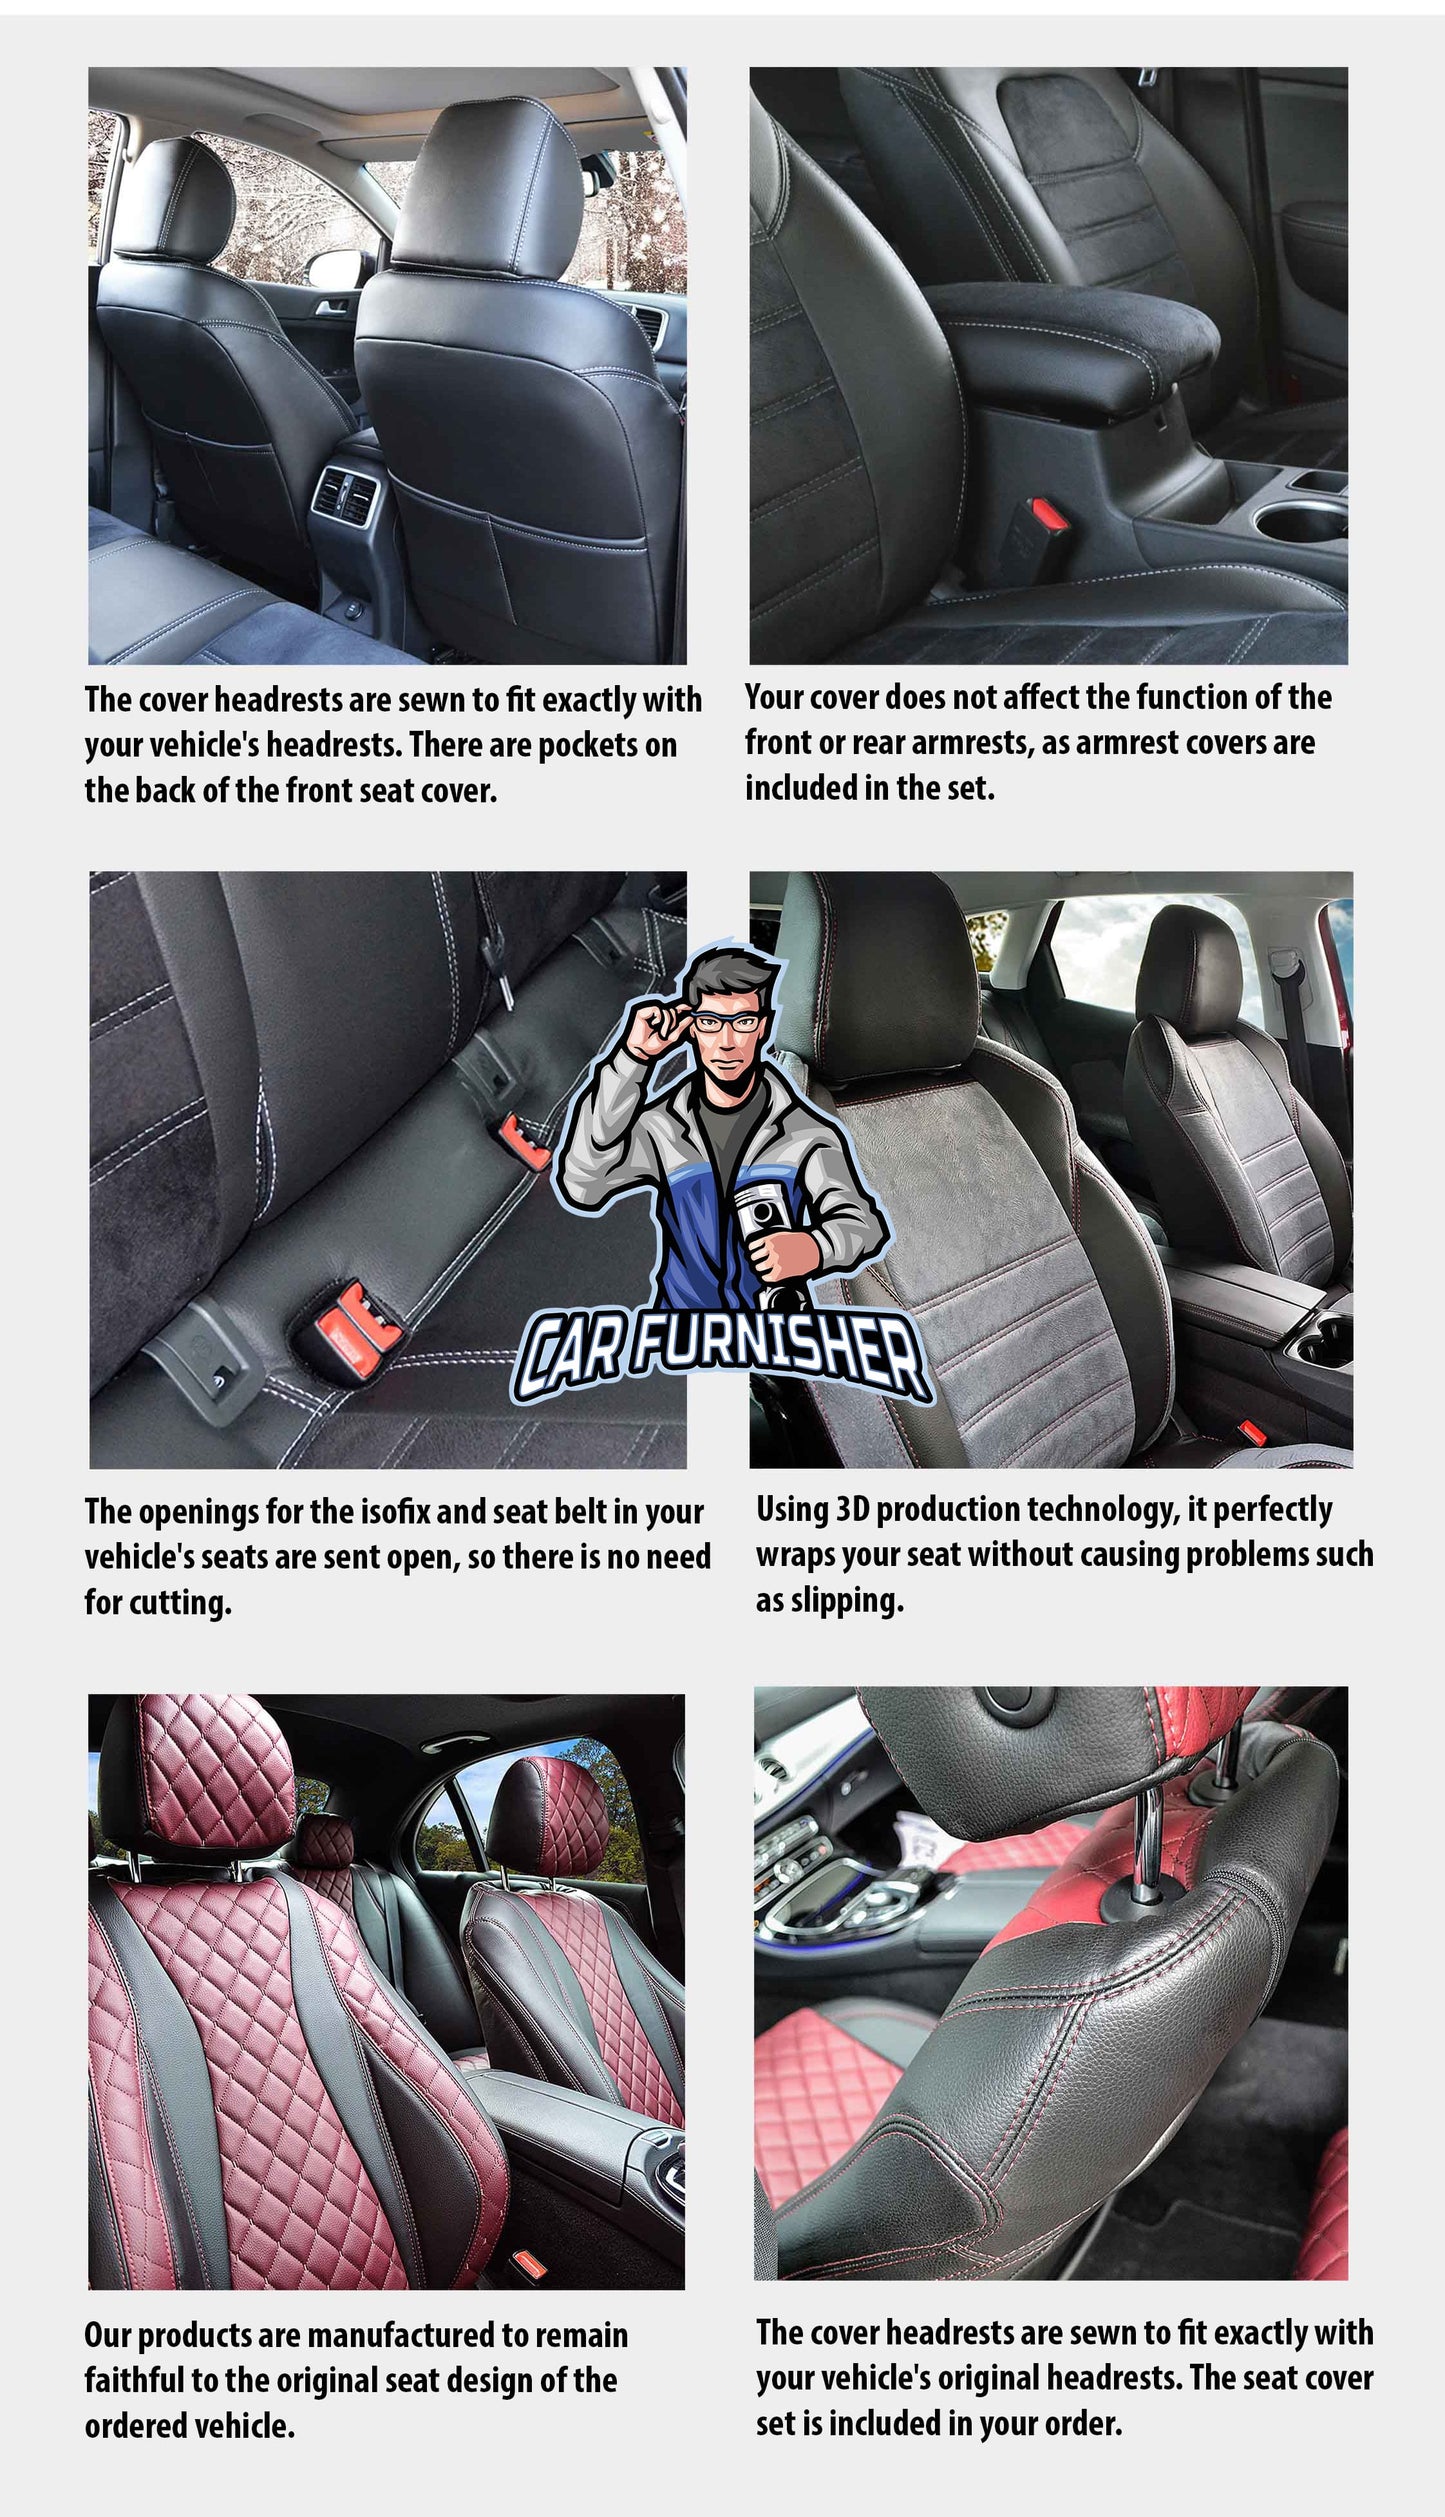 Ford Fiesta Seat Covers Original Jacquard Design Dark Gray Jacquard Fabric